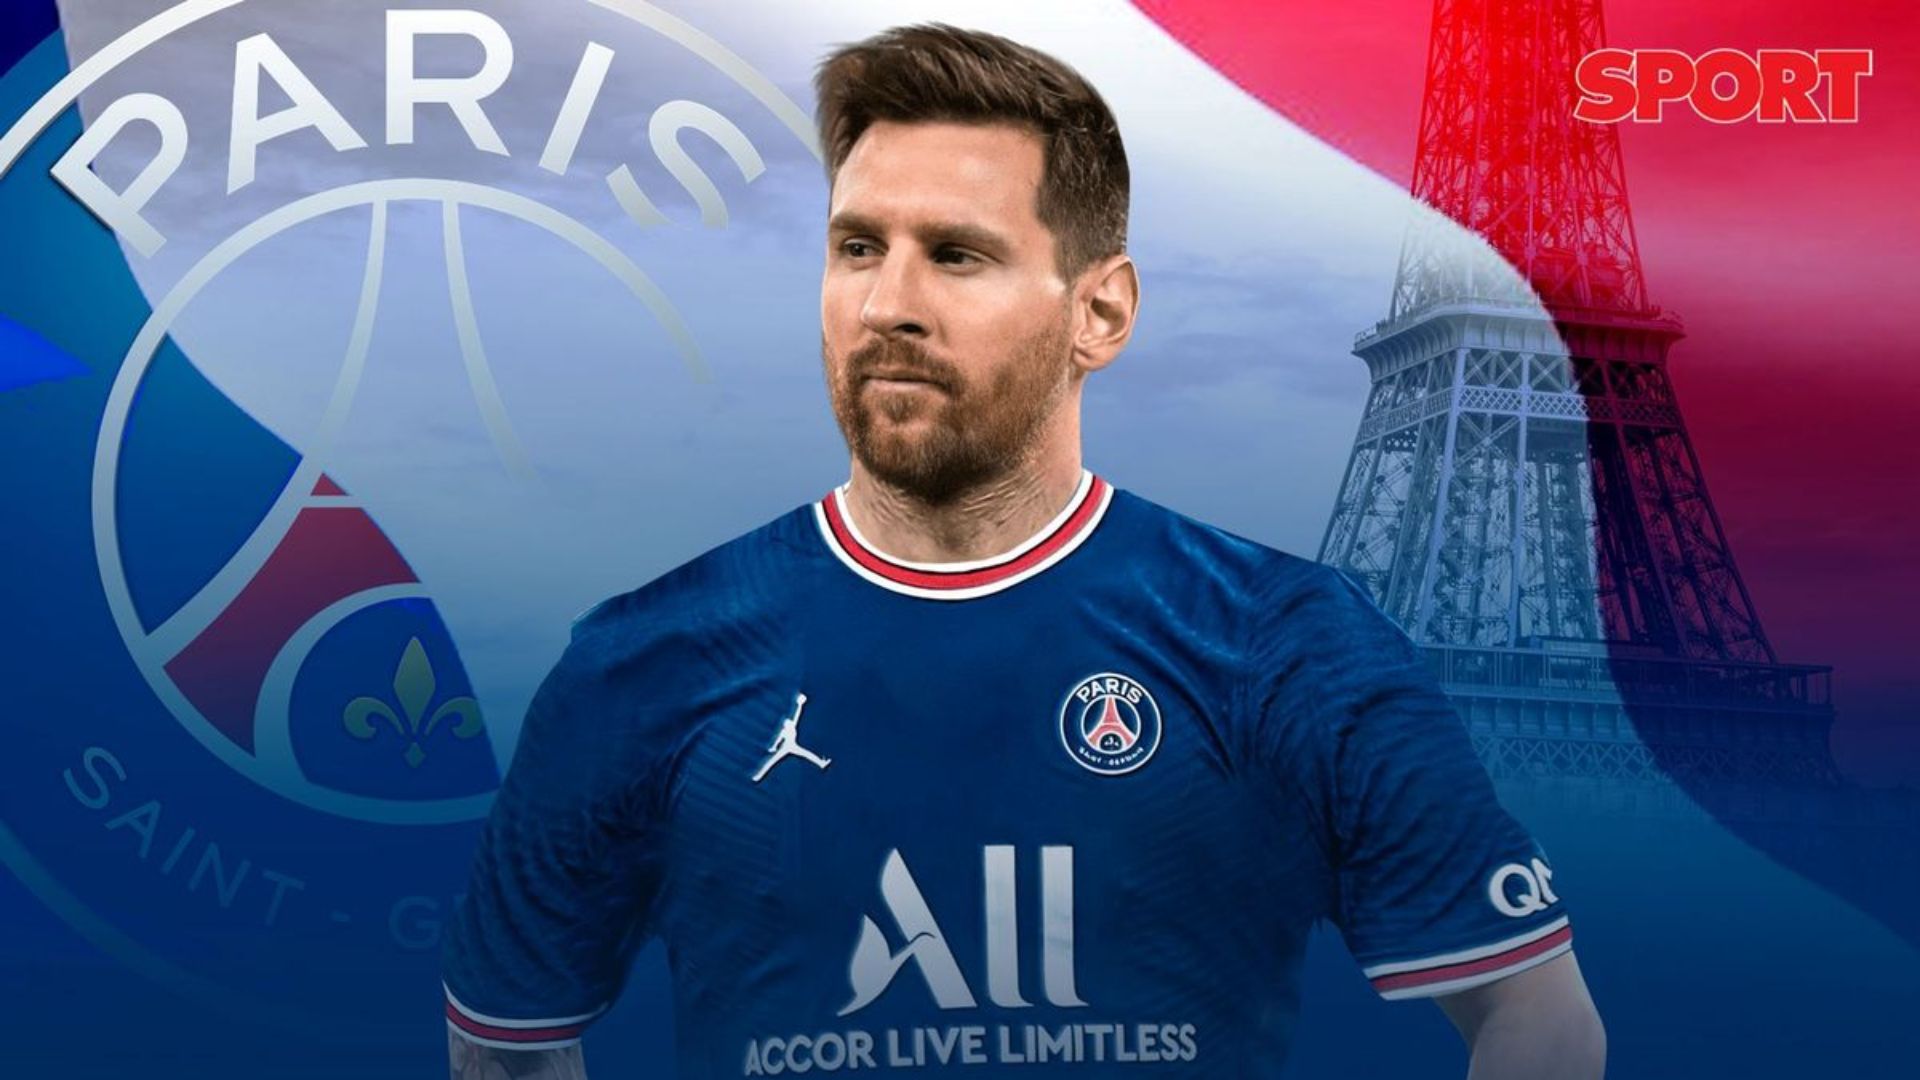 Messi PSG Wallpaper 2021 - Lionel Messi Background, Image & Photo